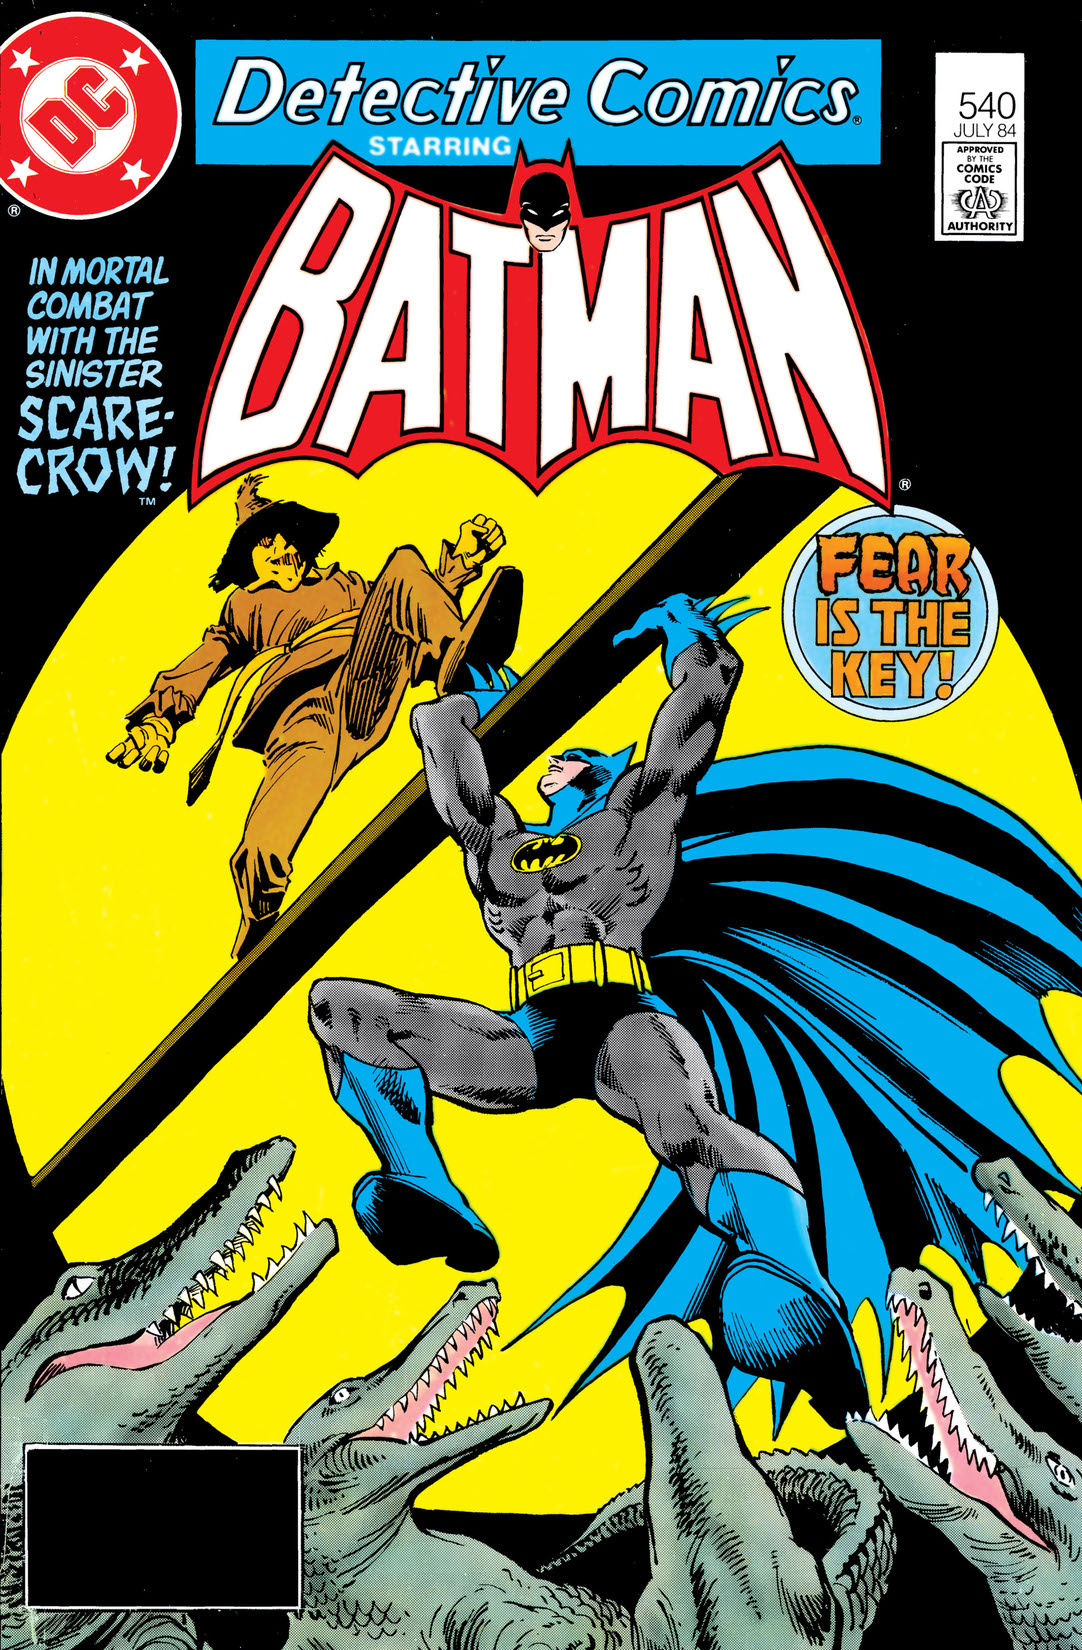 Detective Comics (1937-) #540 preview images